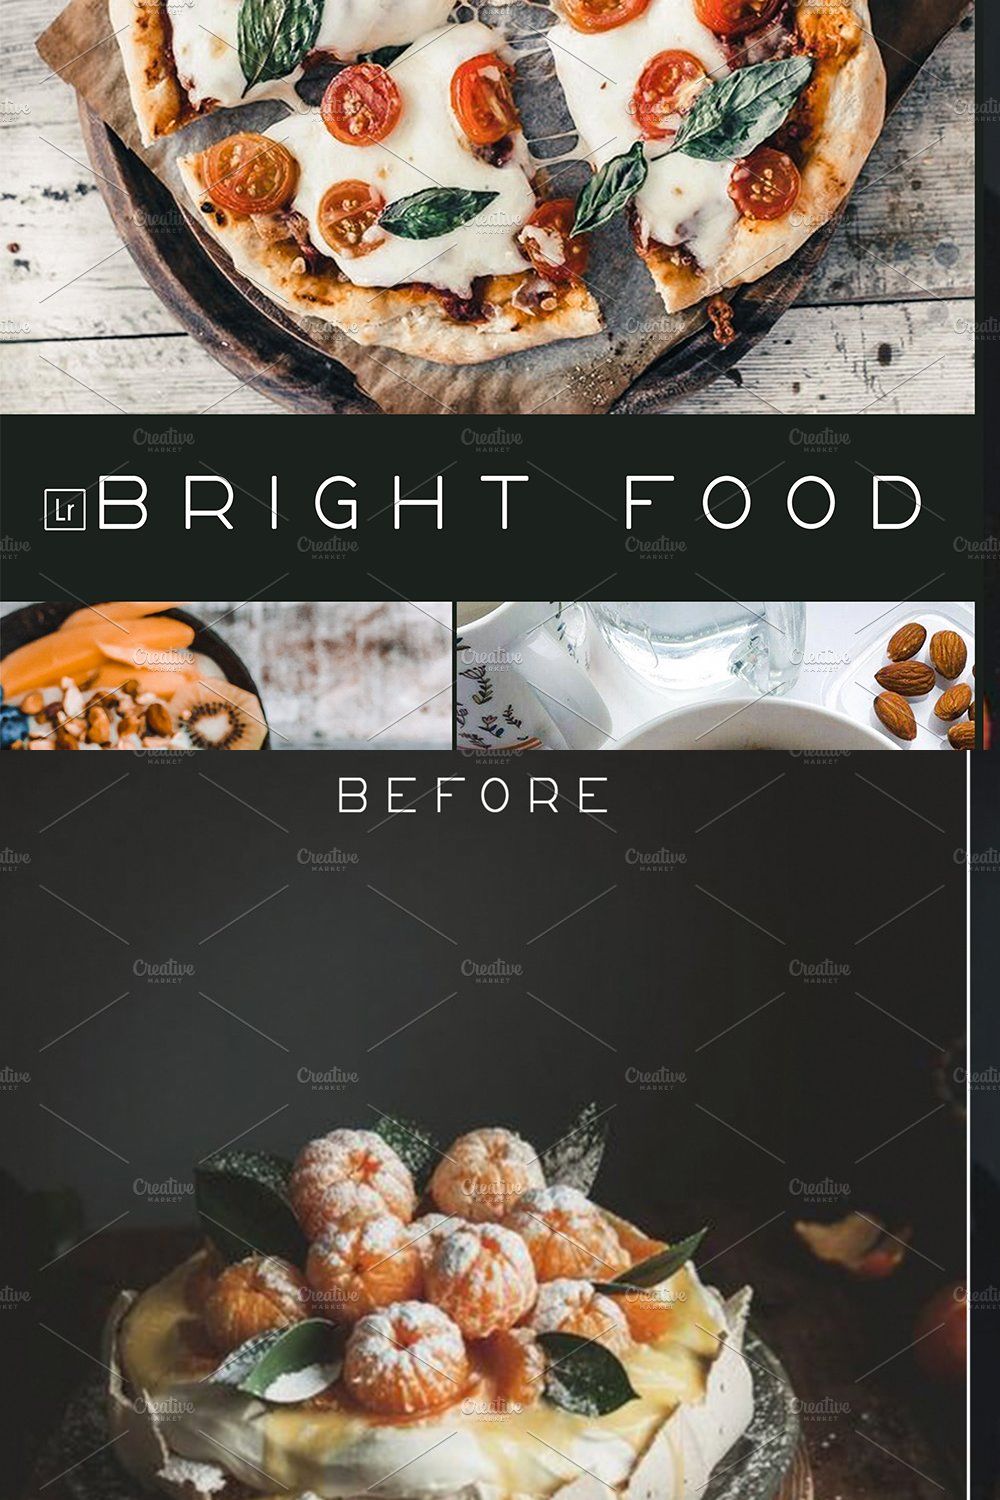 Bright Food Lightroom presets pinterest preview image.